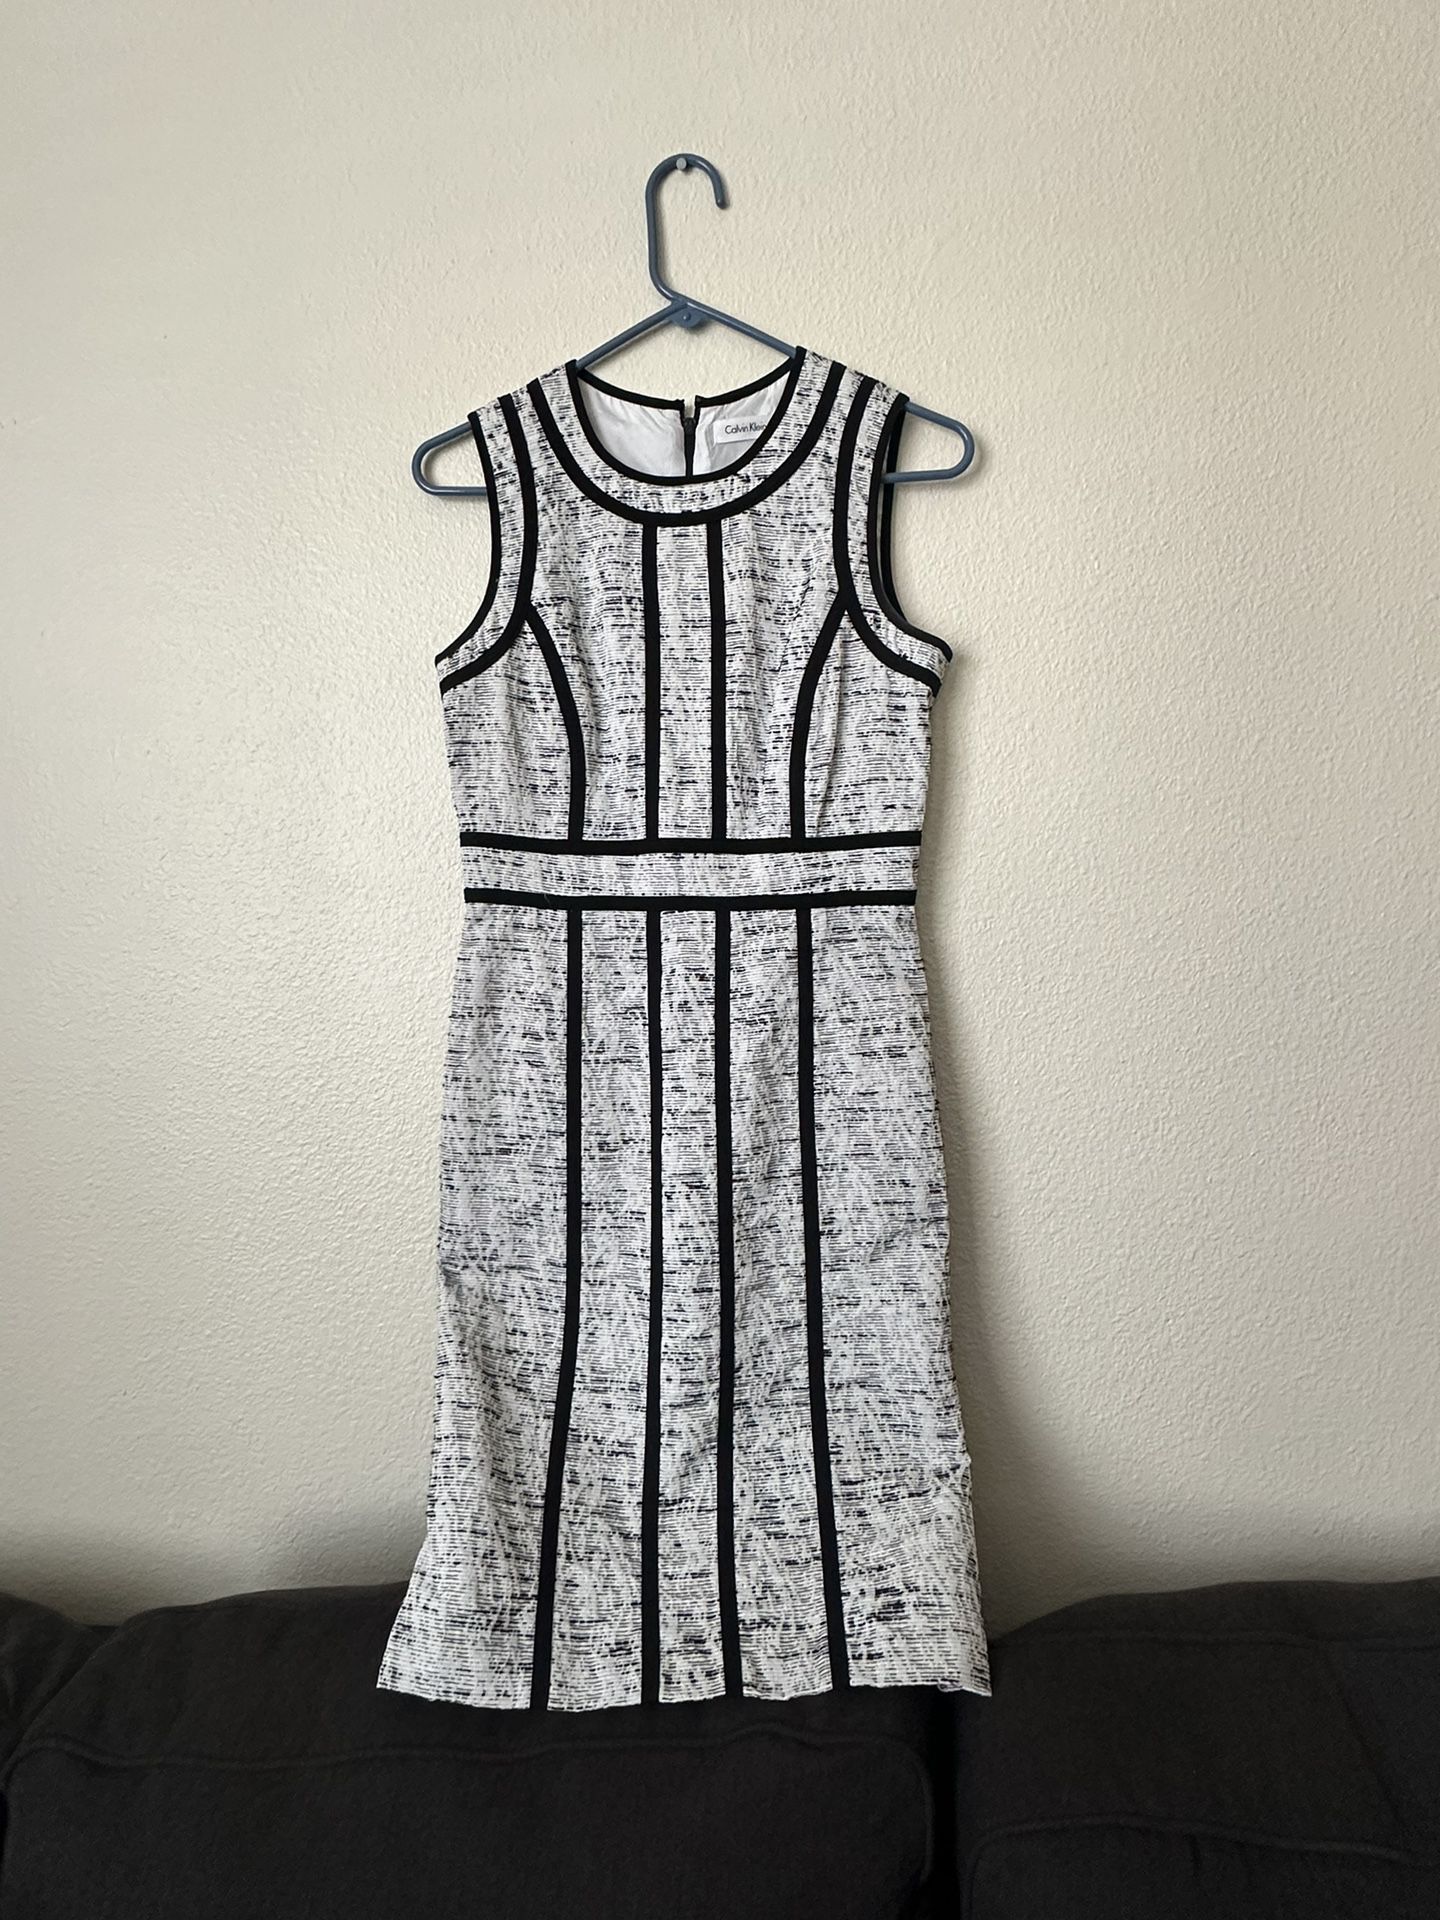 Women’s Calvin Klein size 4 dress (worn one time)